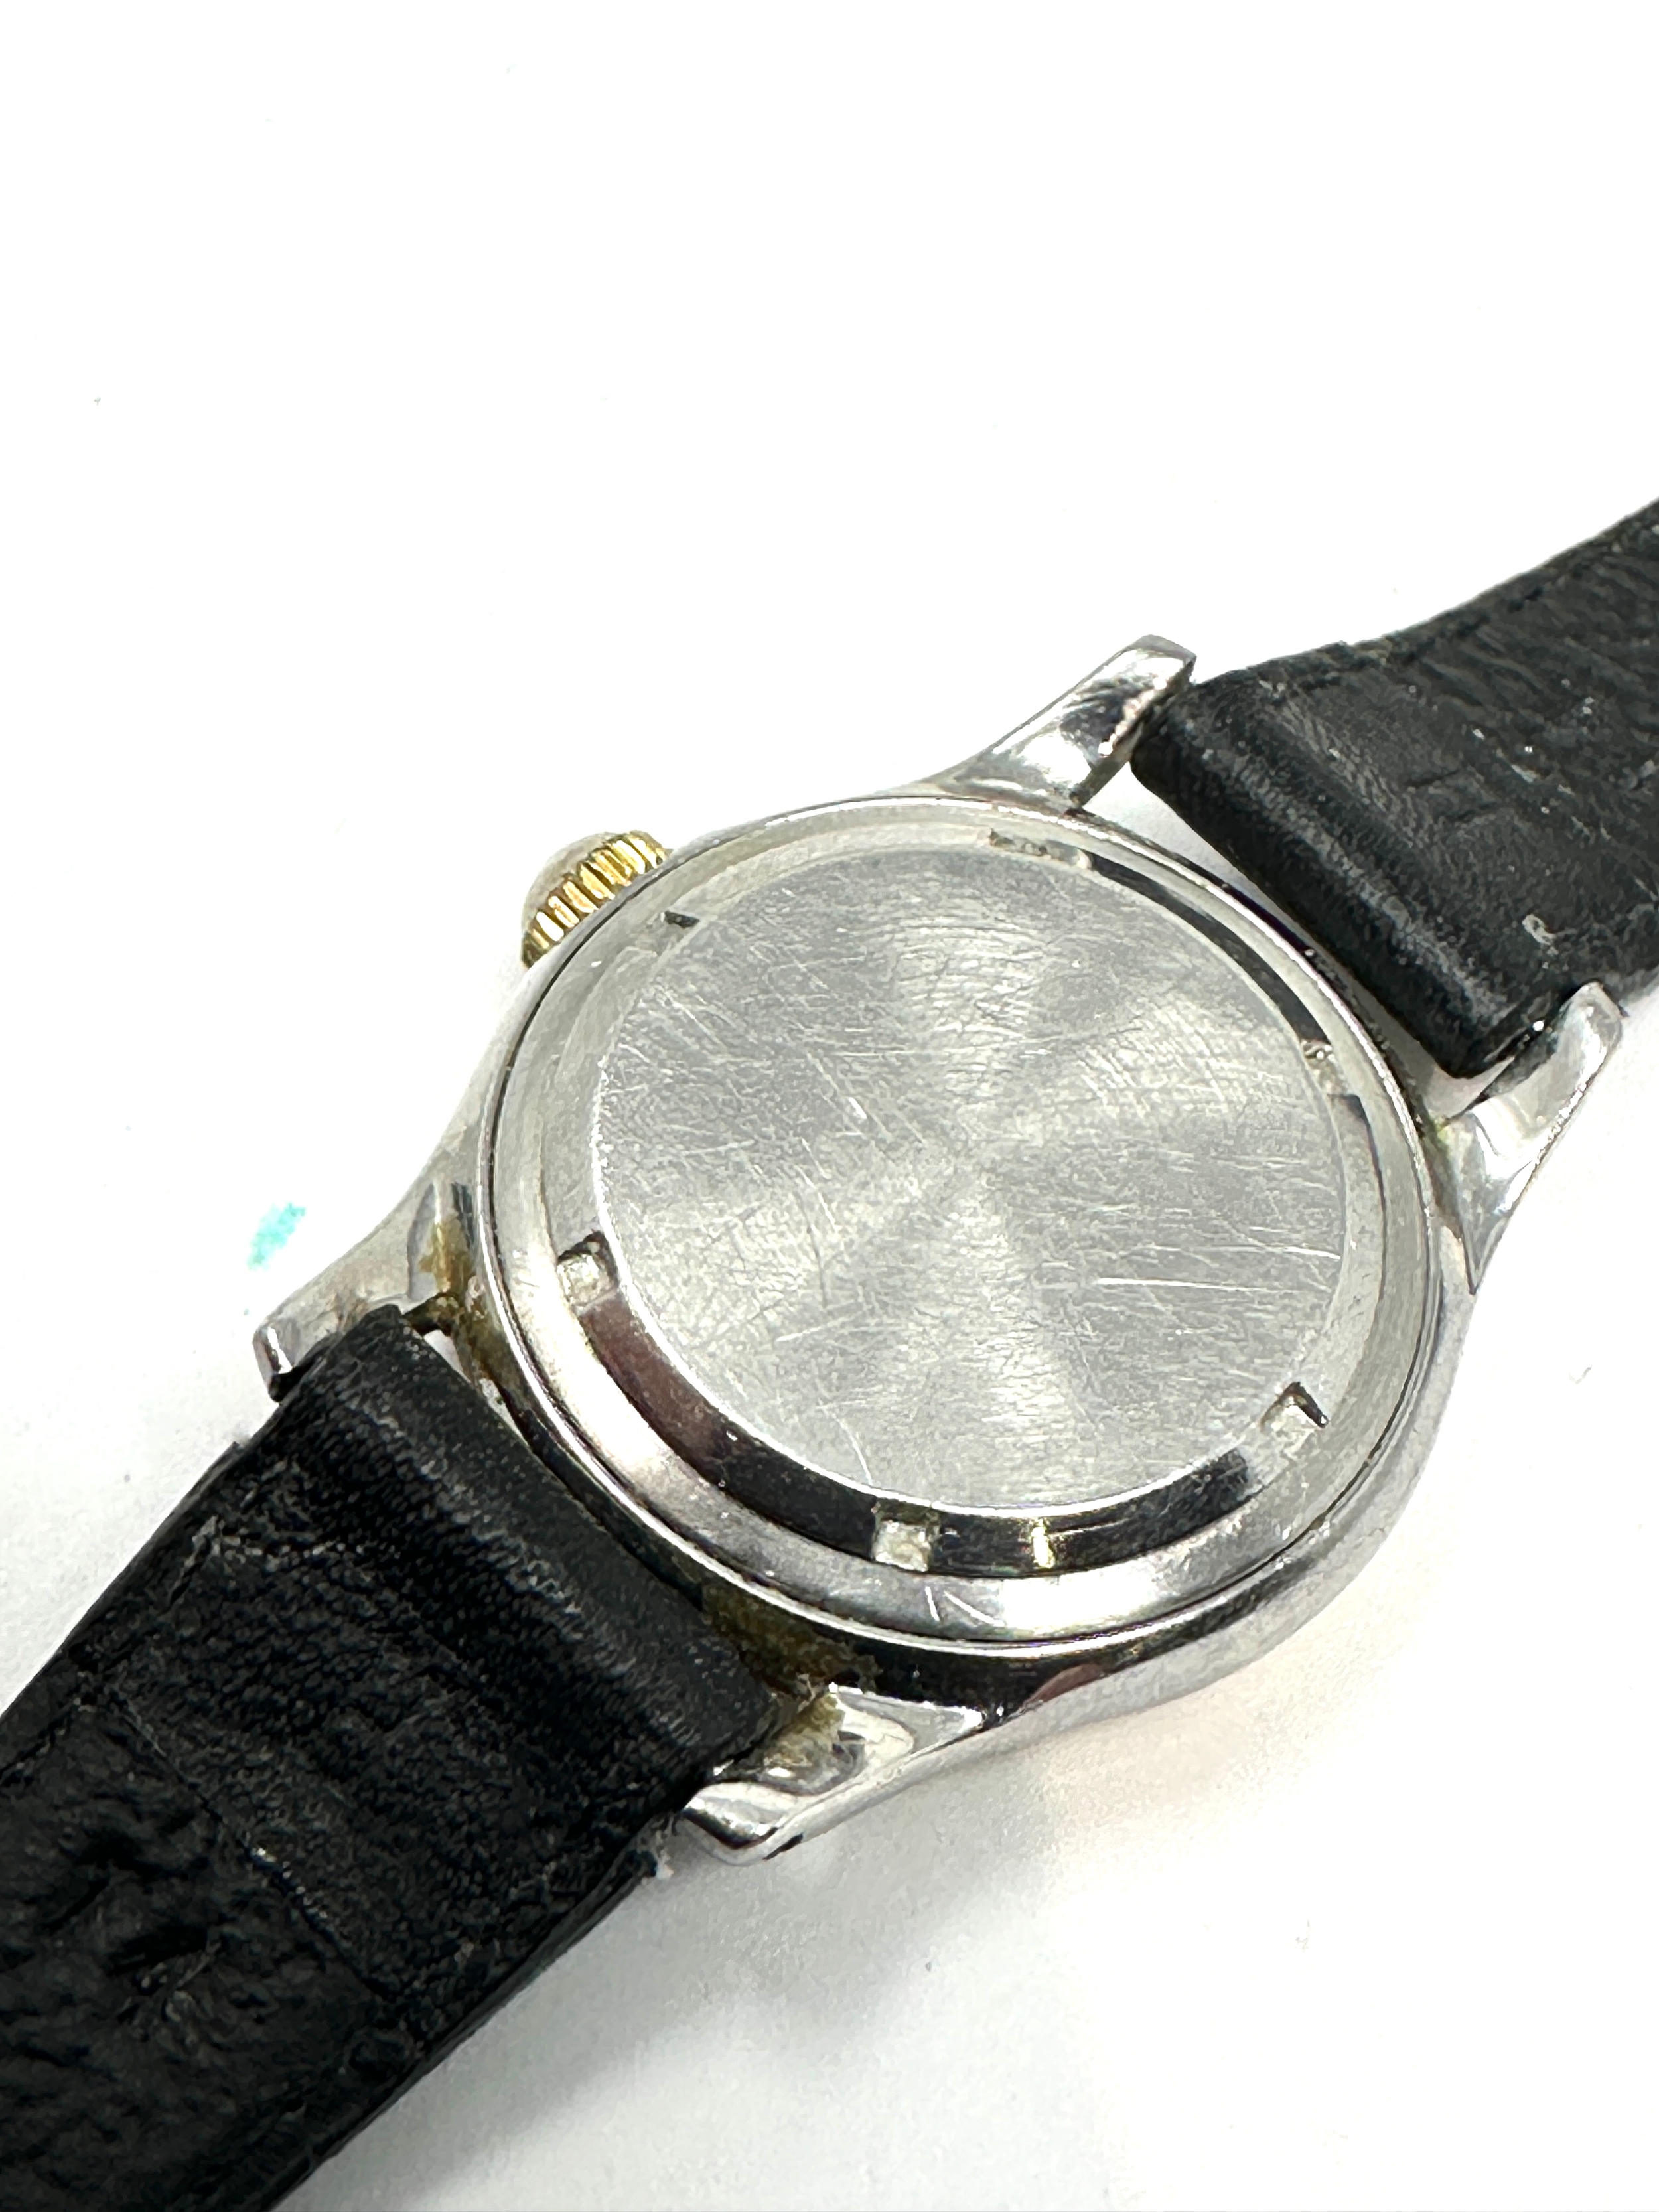 vintage ladies omega wristwatch cal 252 the watch ticks when shaken the winder keeps winding - Image 5 of 6